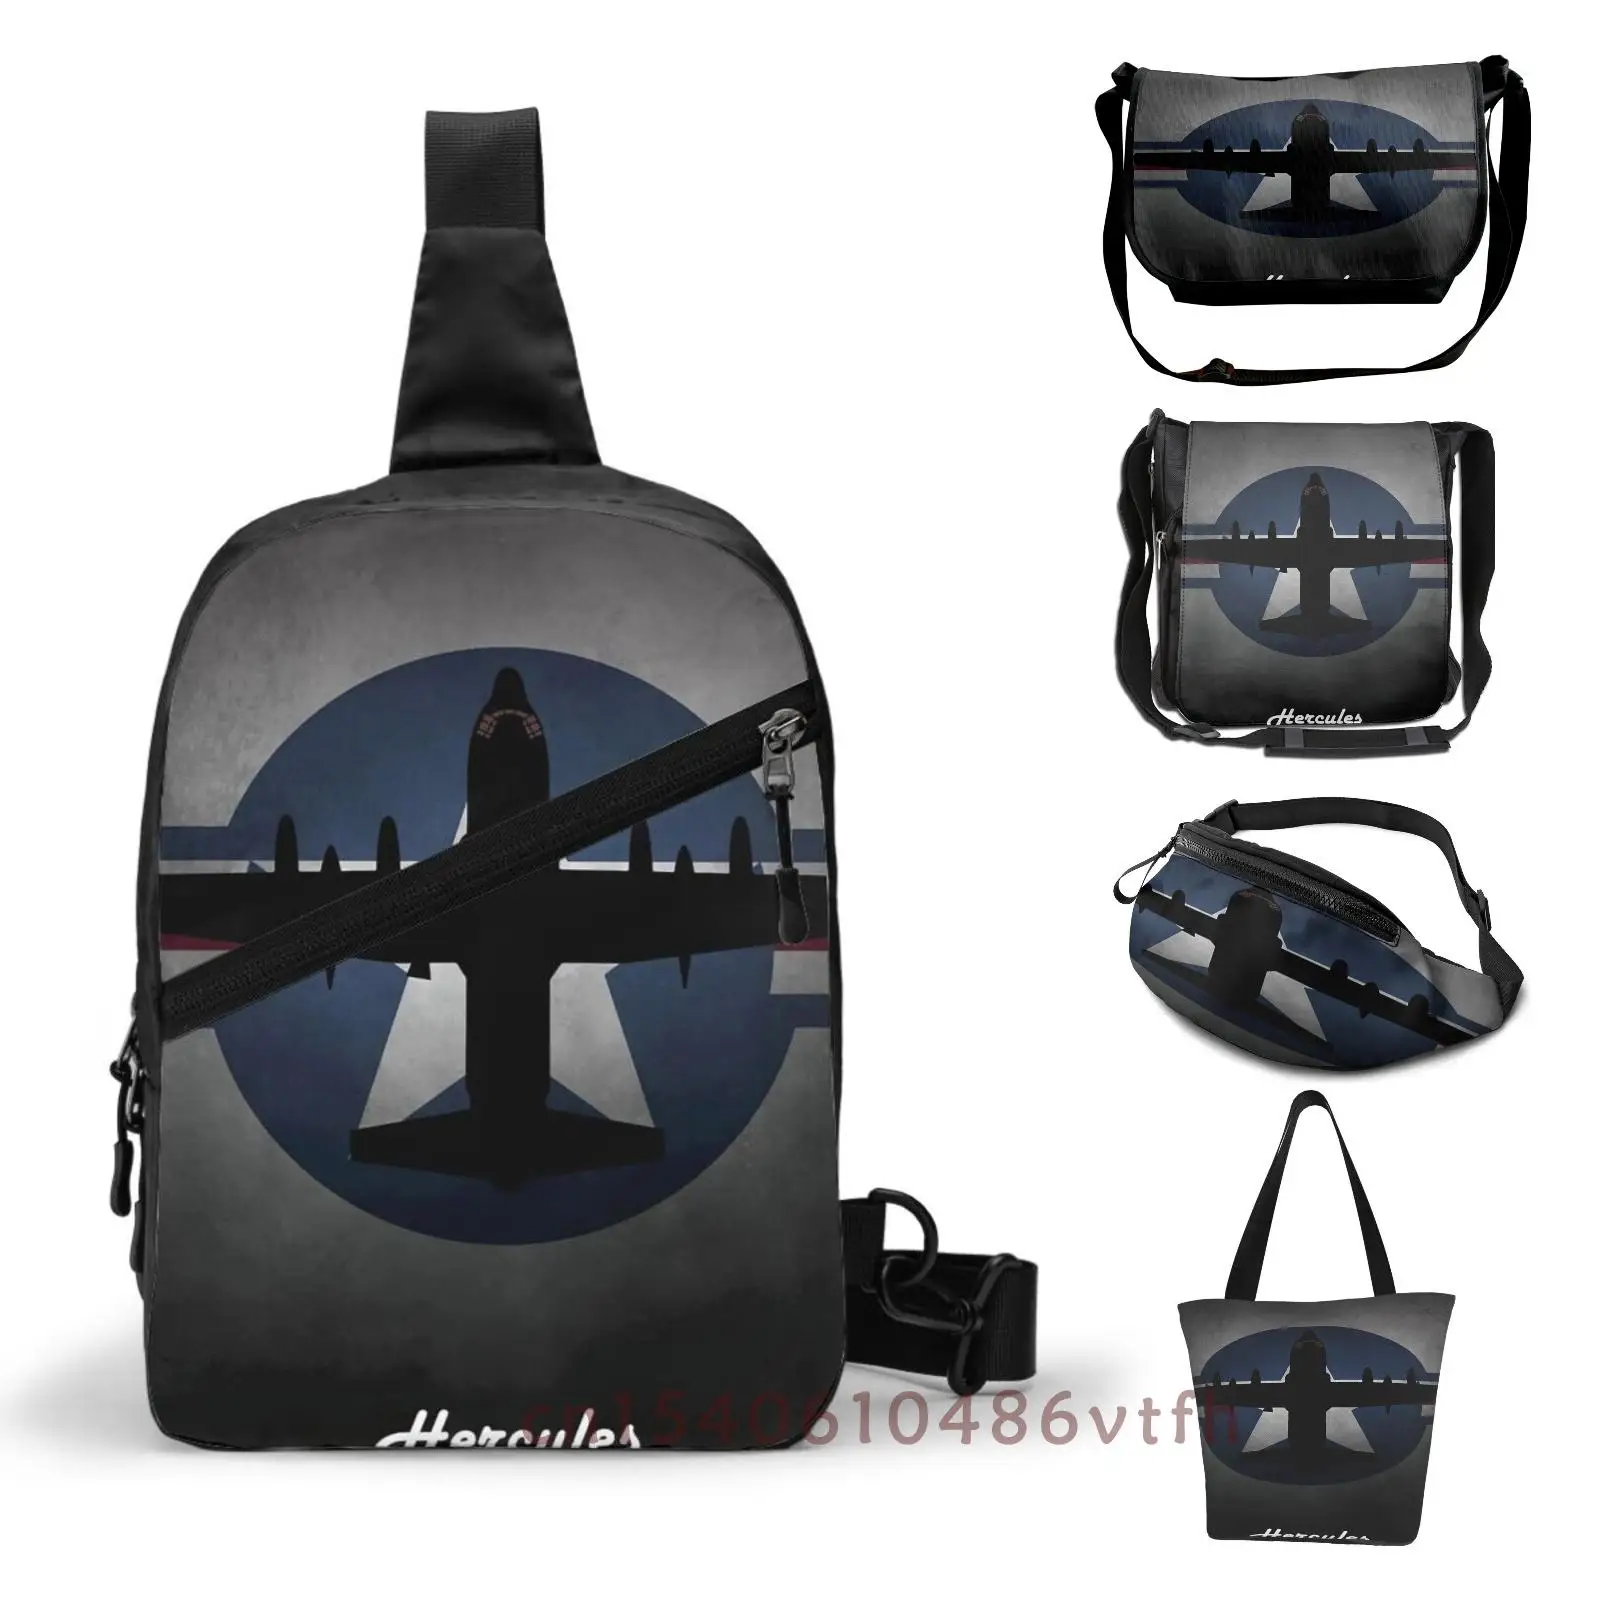 Functional Men Chest Bag C-130 Hercules Usaf Streetwear Bag Waist Pack  Women Black Belt Bag Hip Purse Shoulder Crossbody Bag